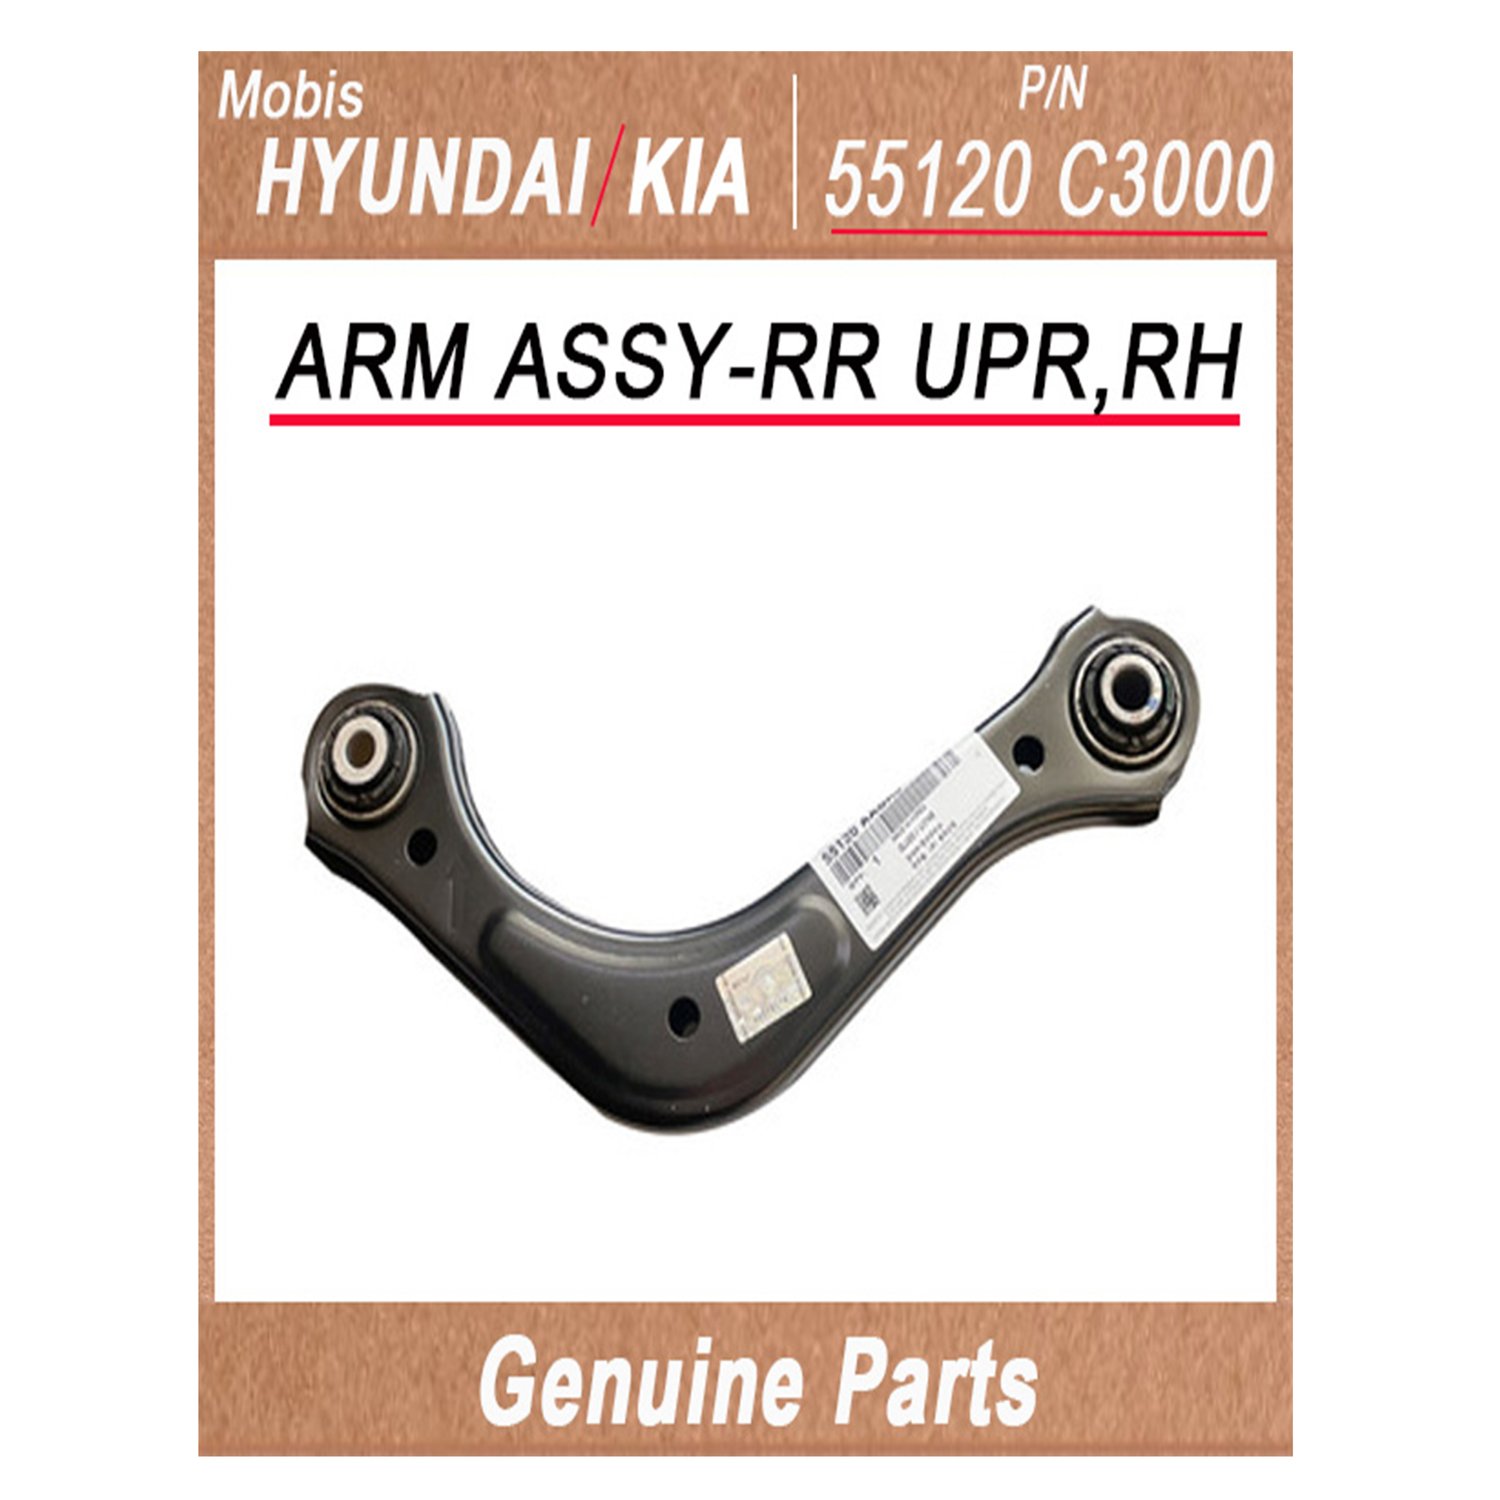 55120C3000 _ ARM ASSY_RR UPR_RH _ Genuine Korean Automotive Spare Parts _ Hyundai Kia _Mobis_